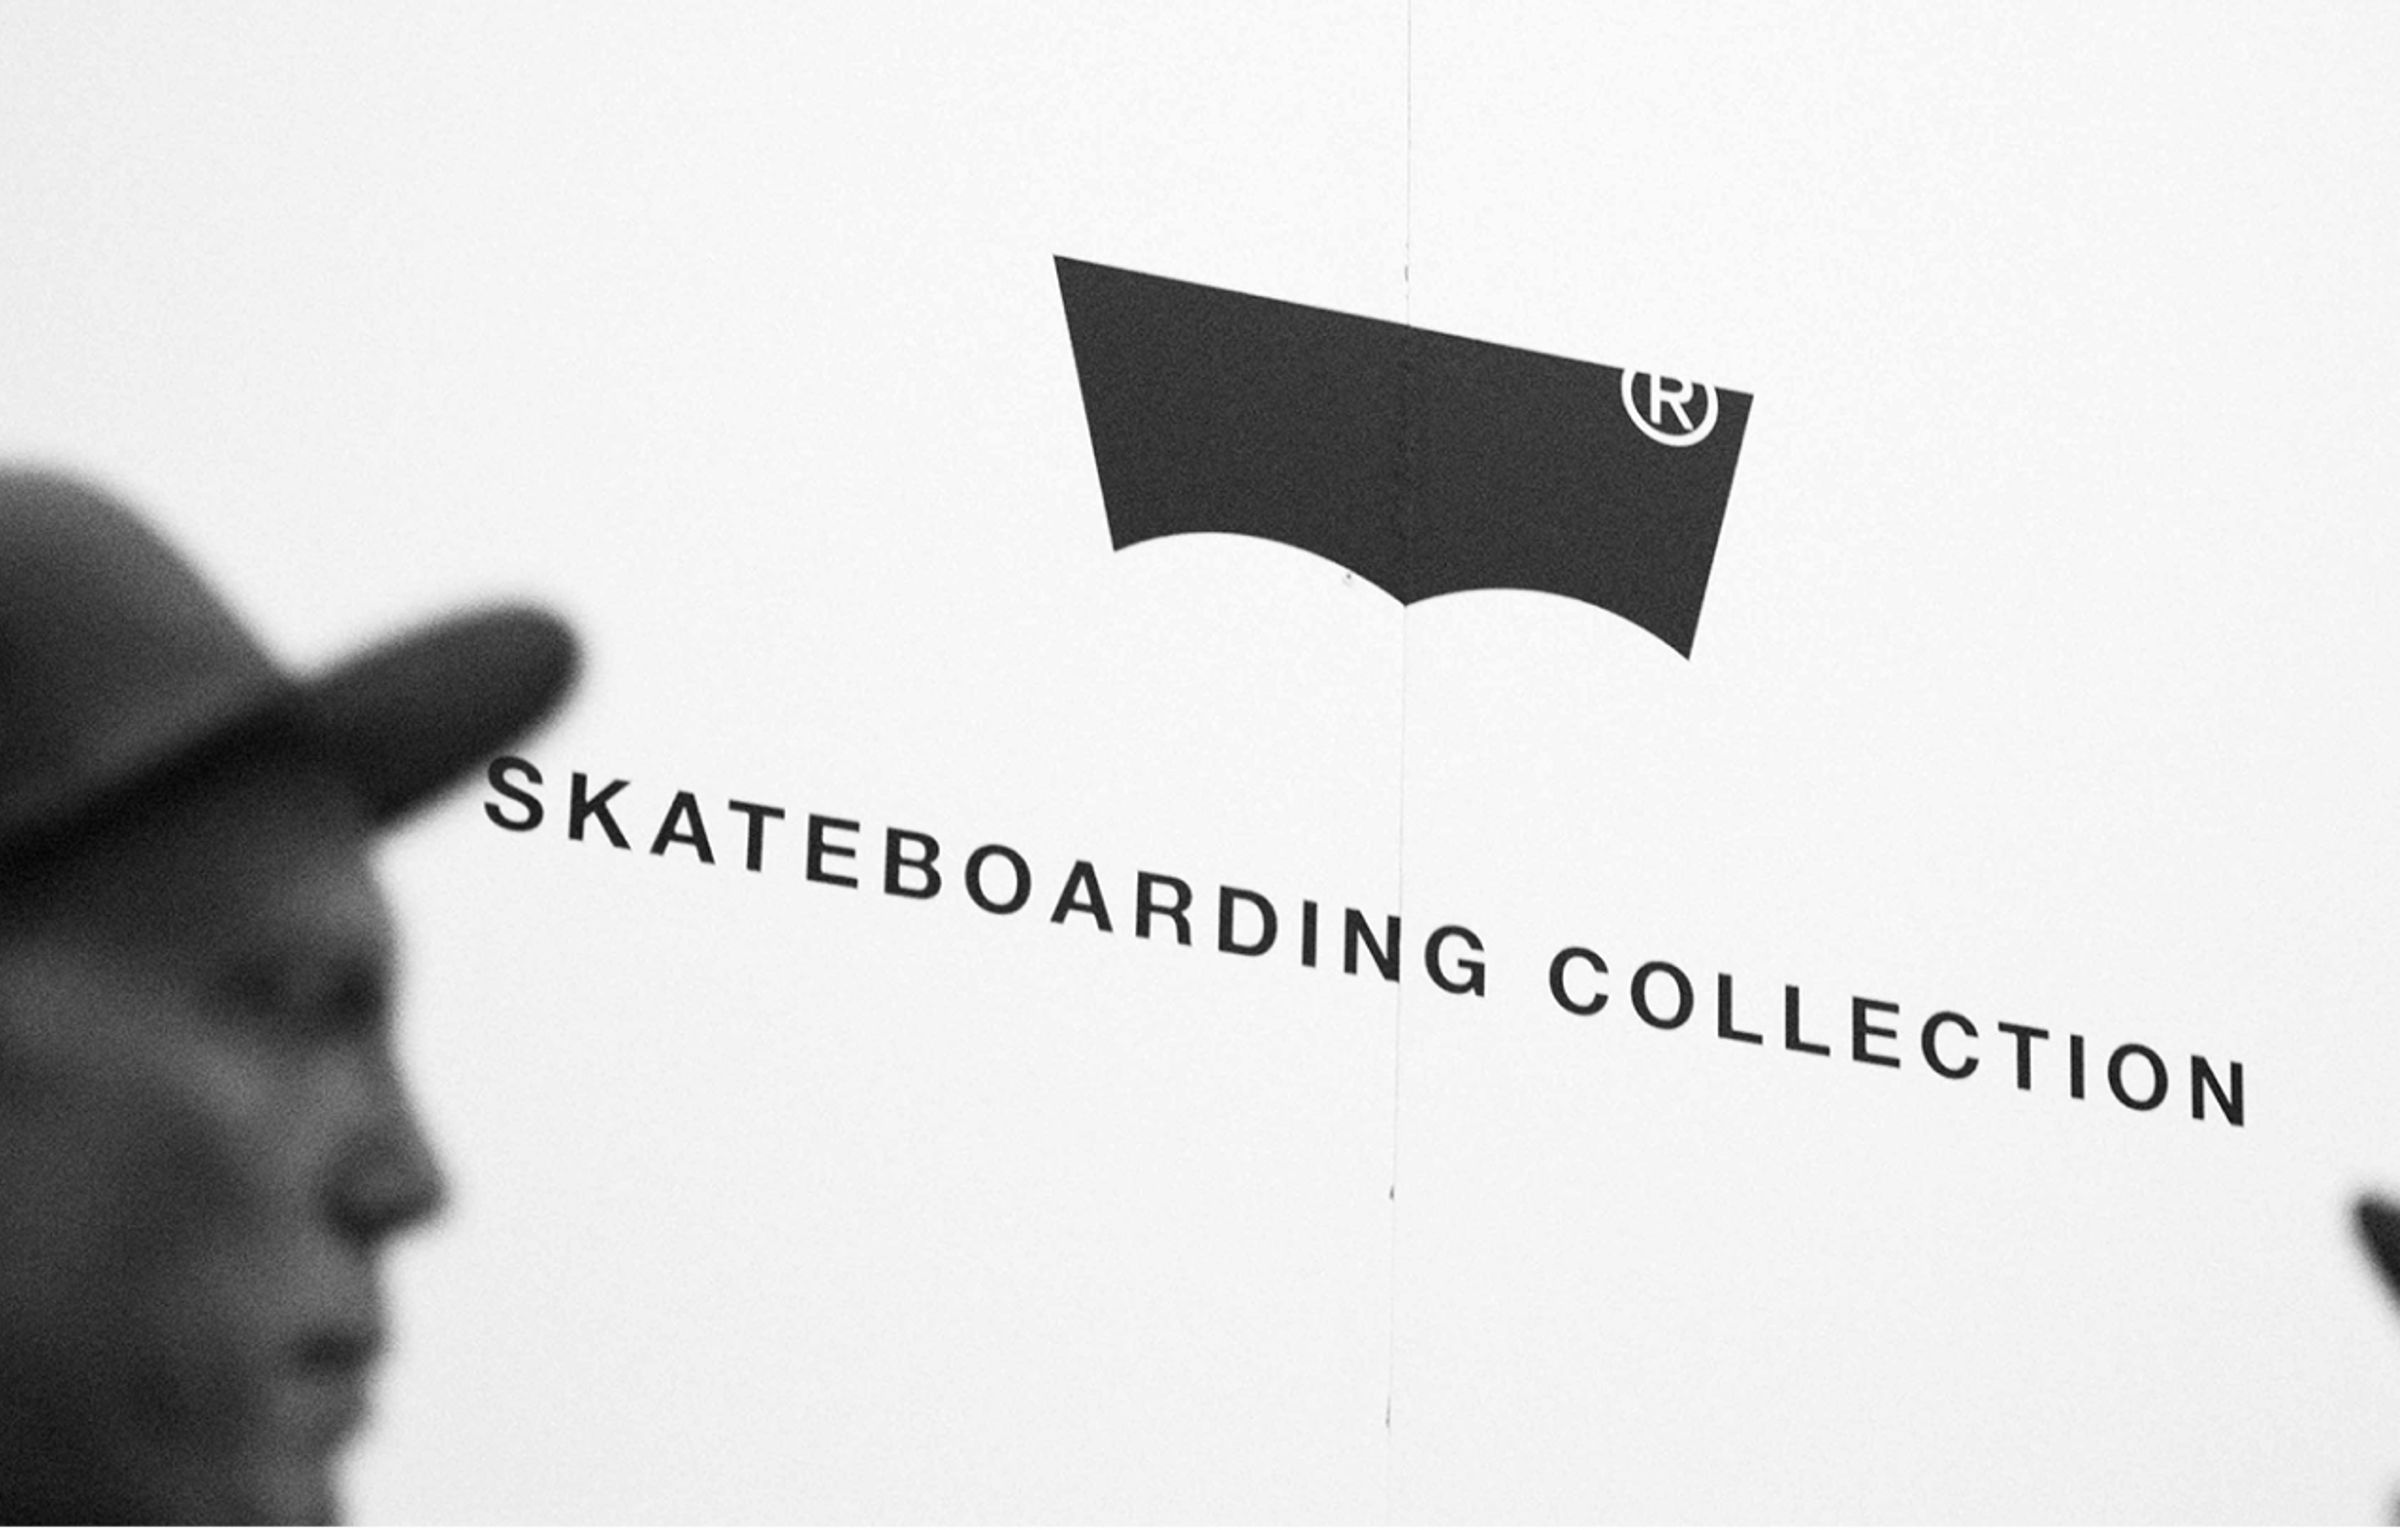 Levis Skateboarding Collection logo